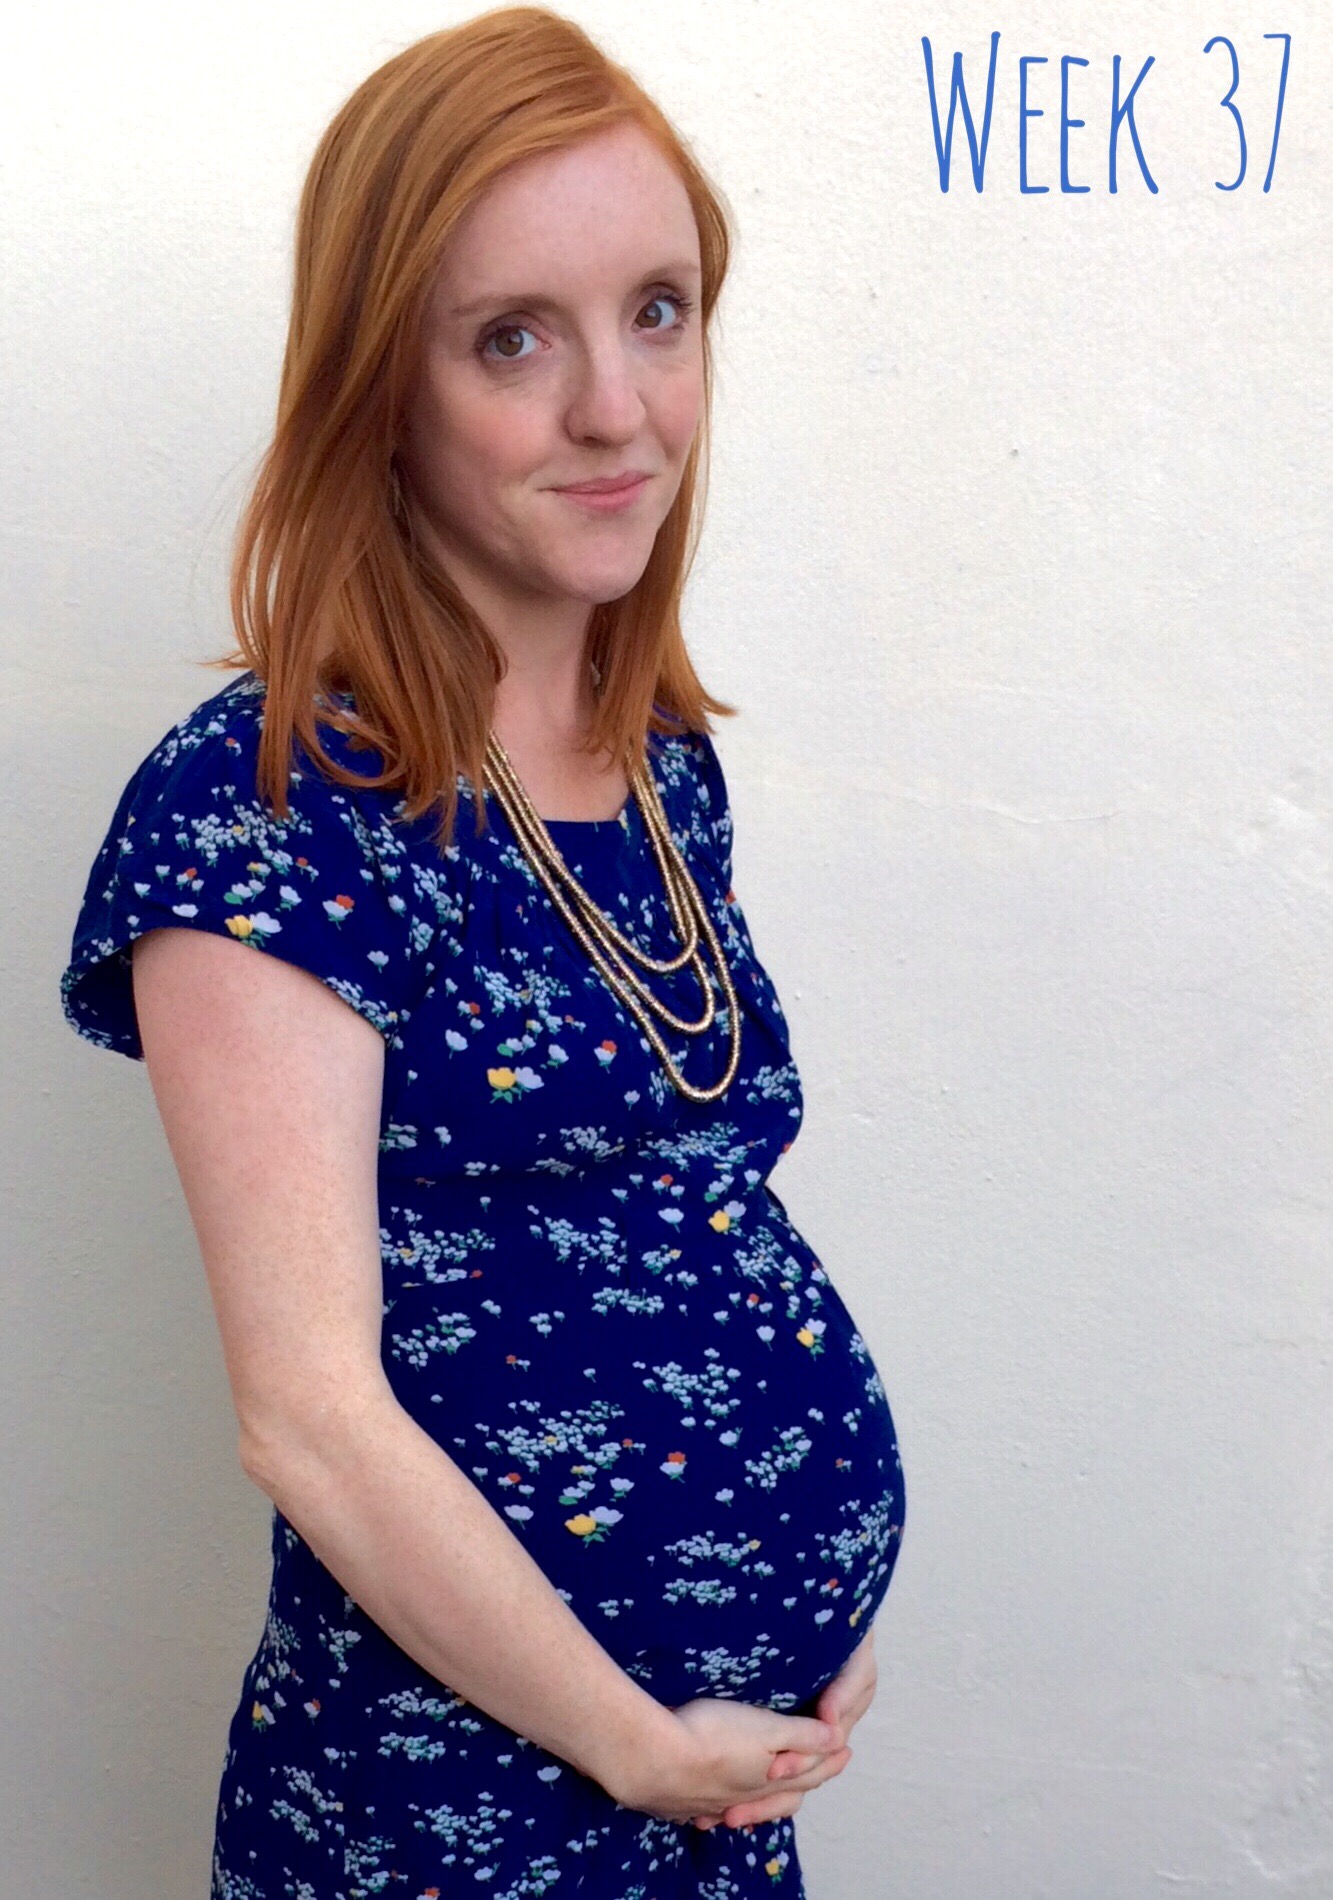 37 weeks pregnant baby bump - third trimester pregnancy bump shot